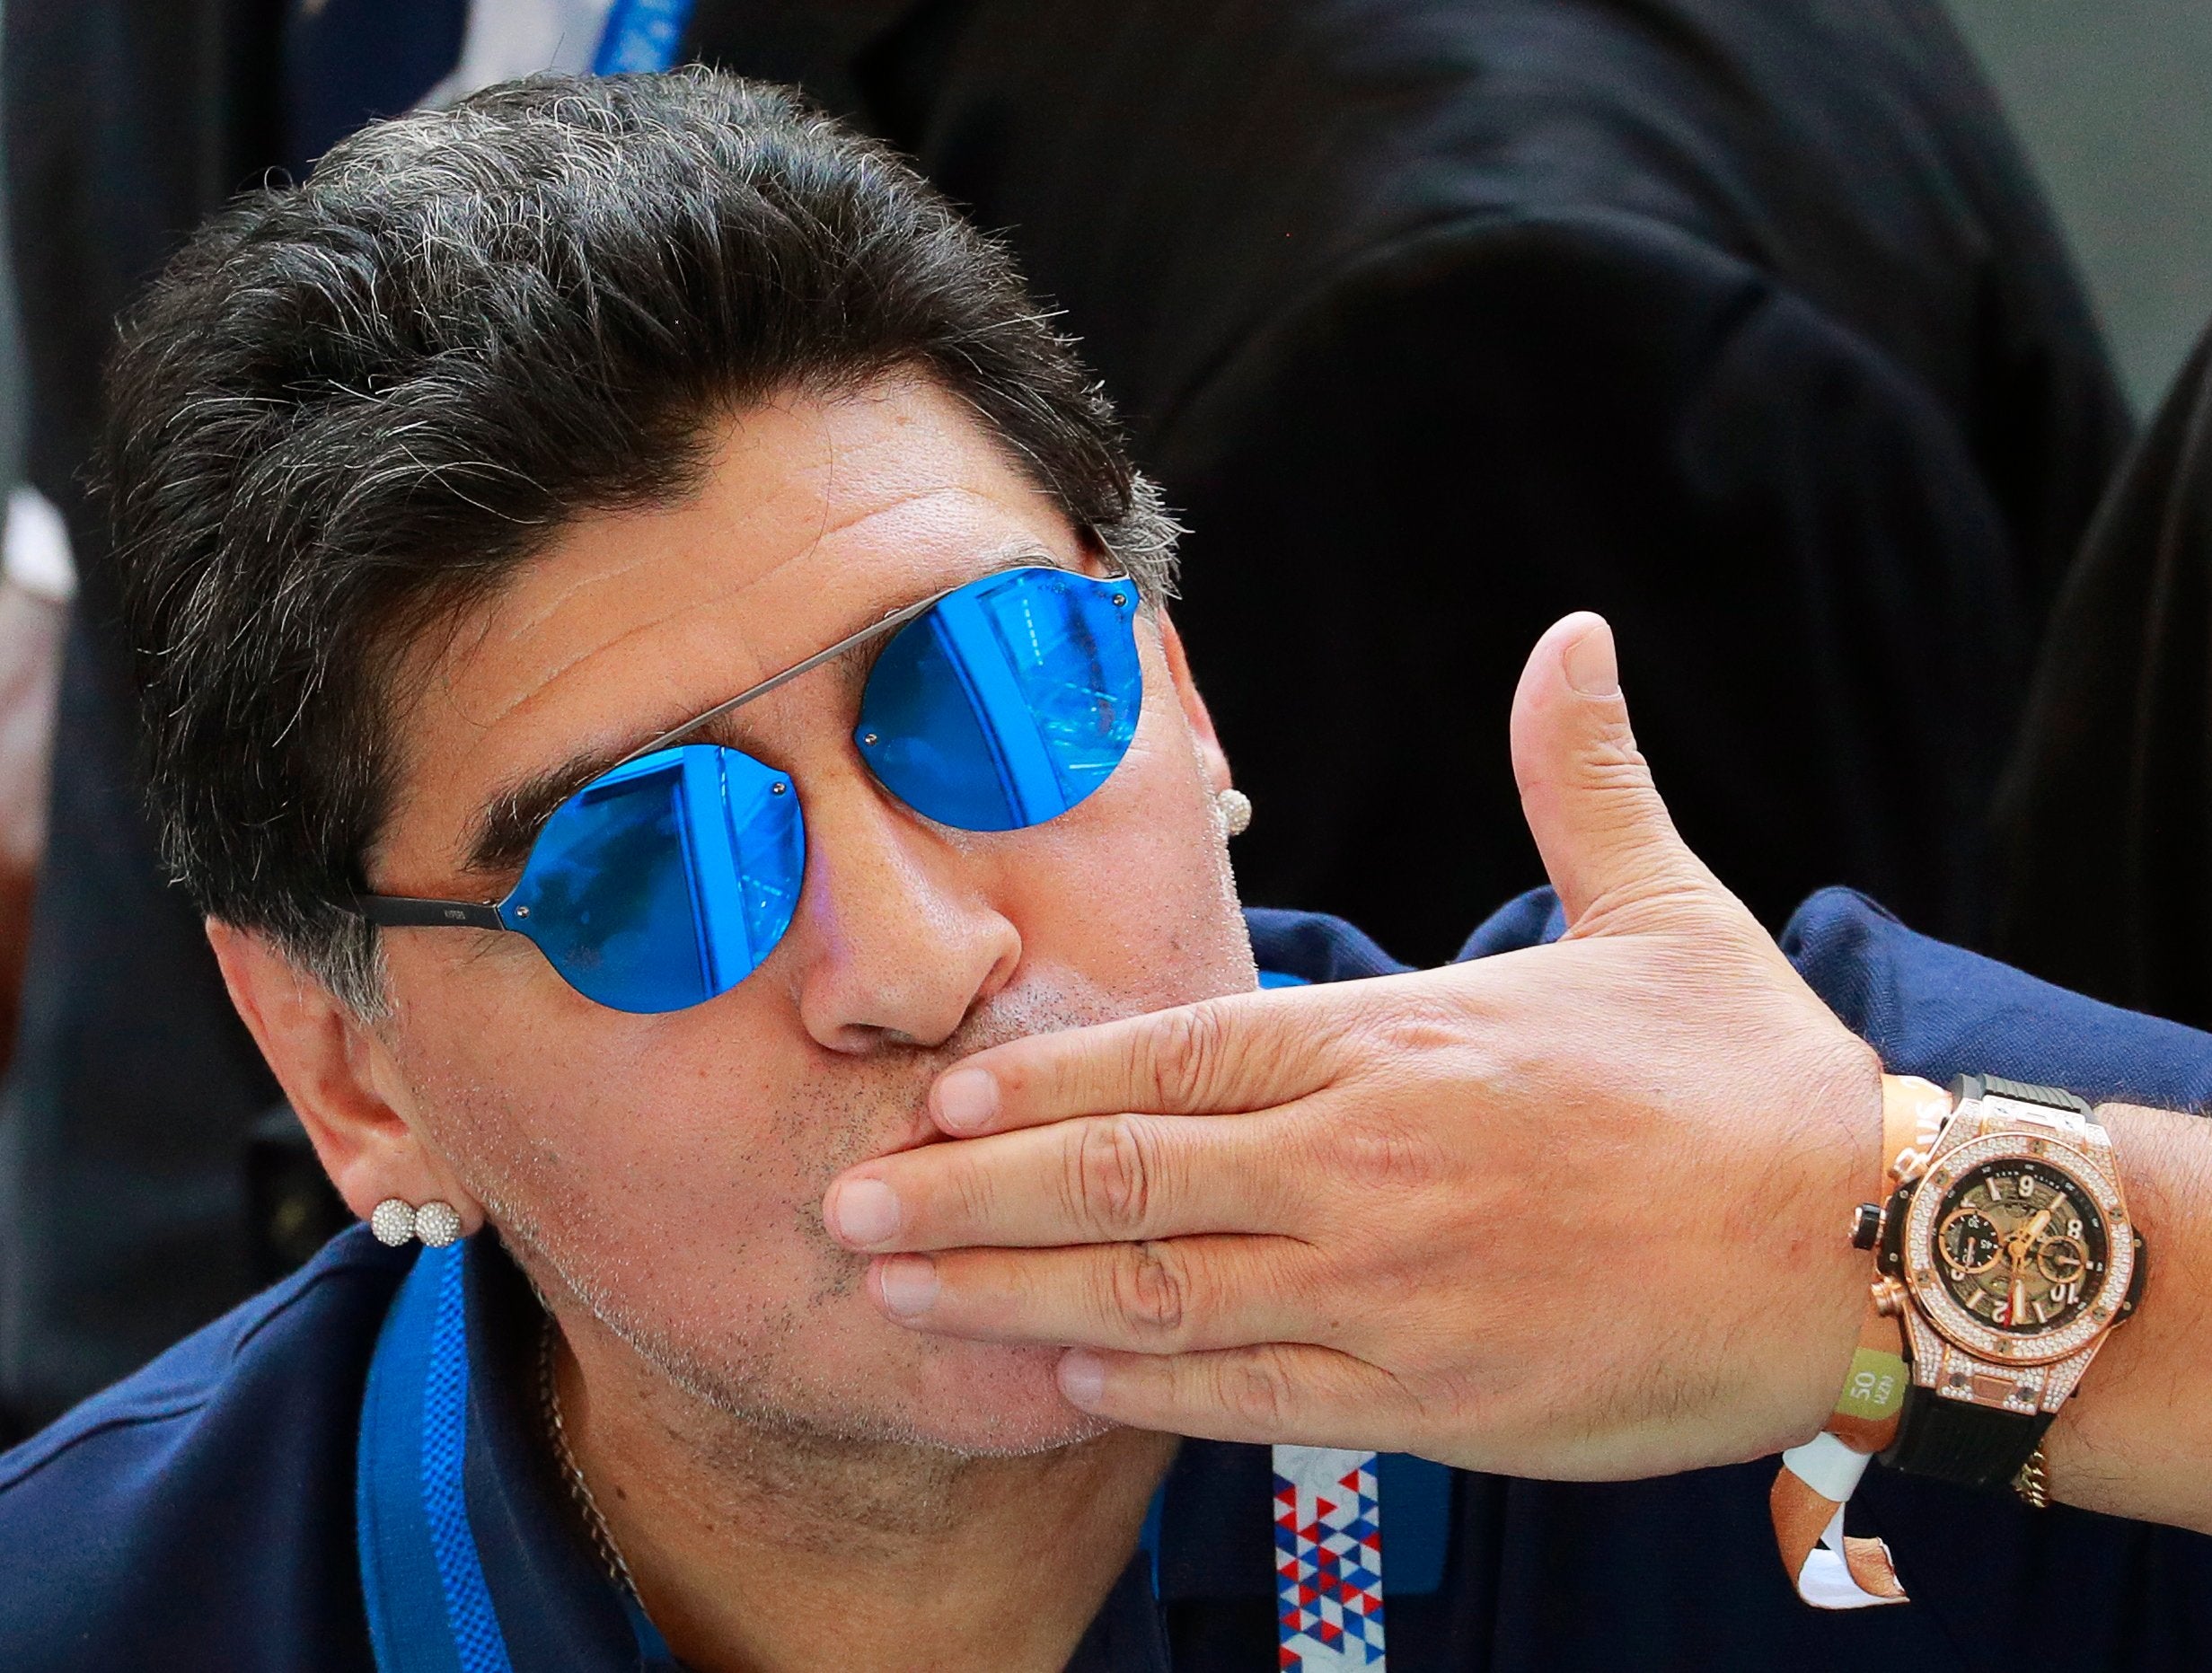 Fifa has hit out at Diego Maradona